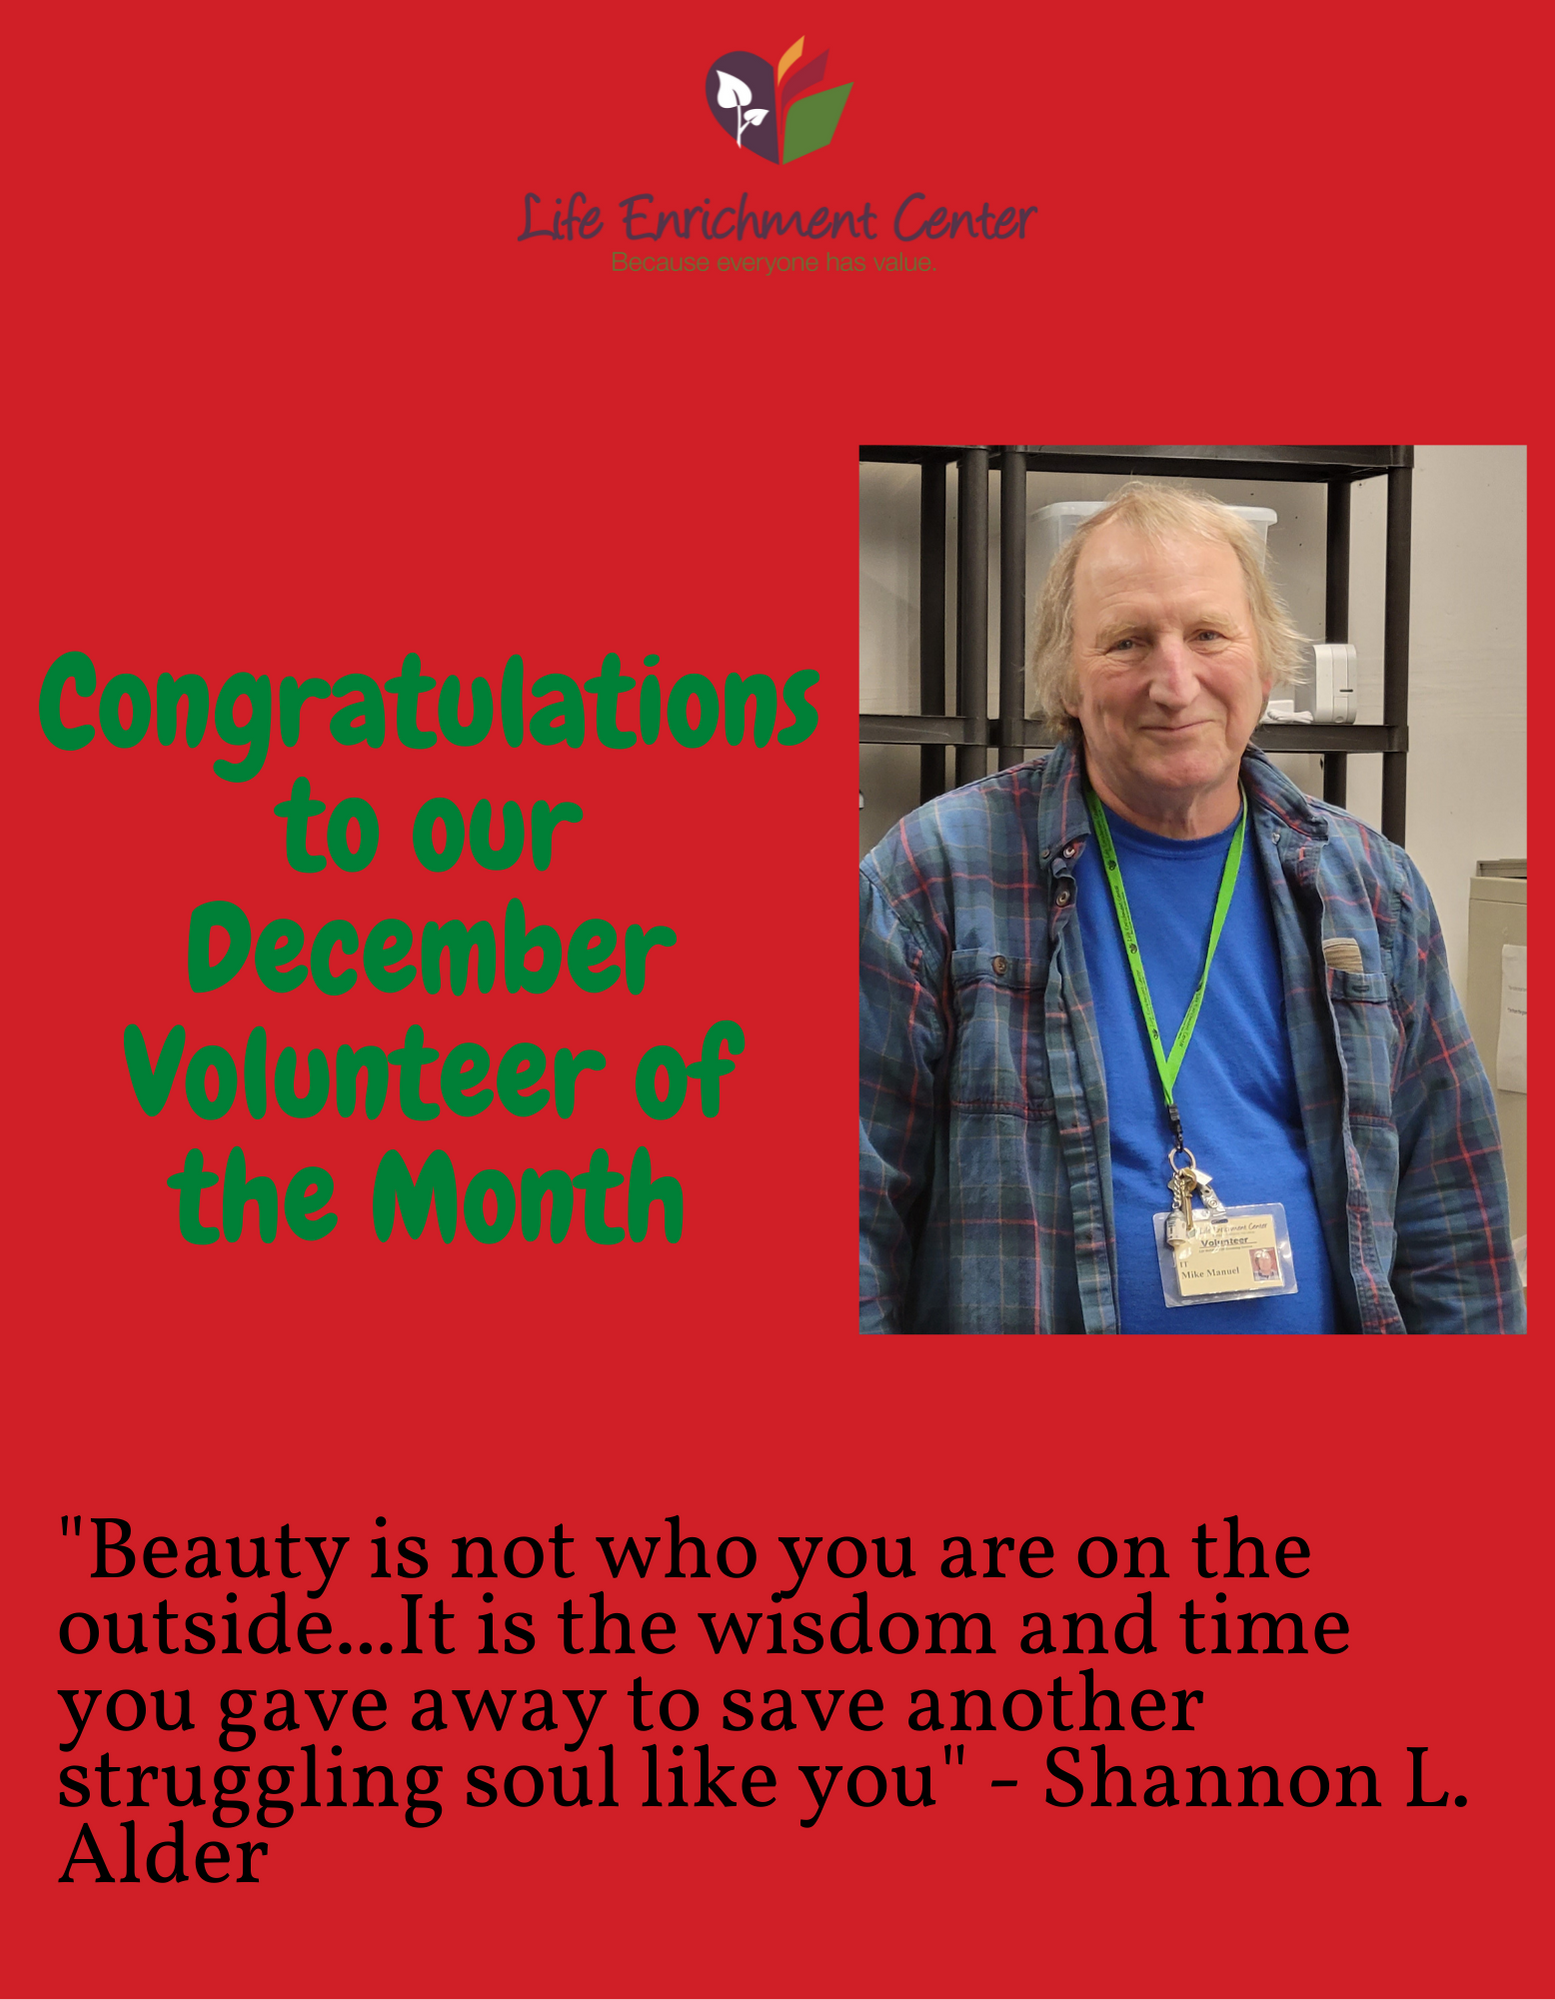 Mike Manuel December's Volunteer of the Month